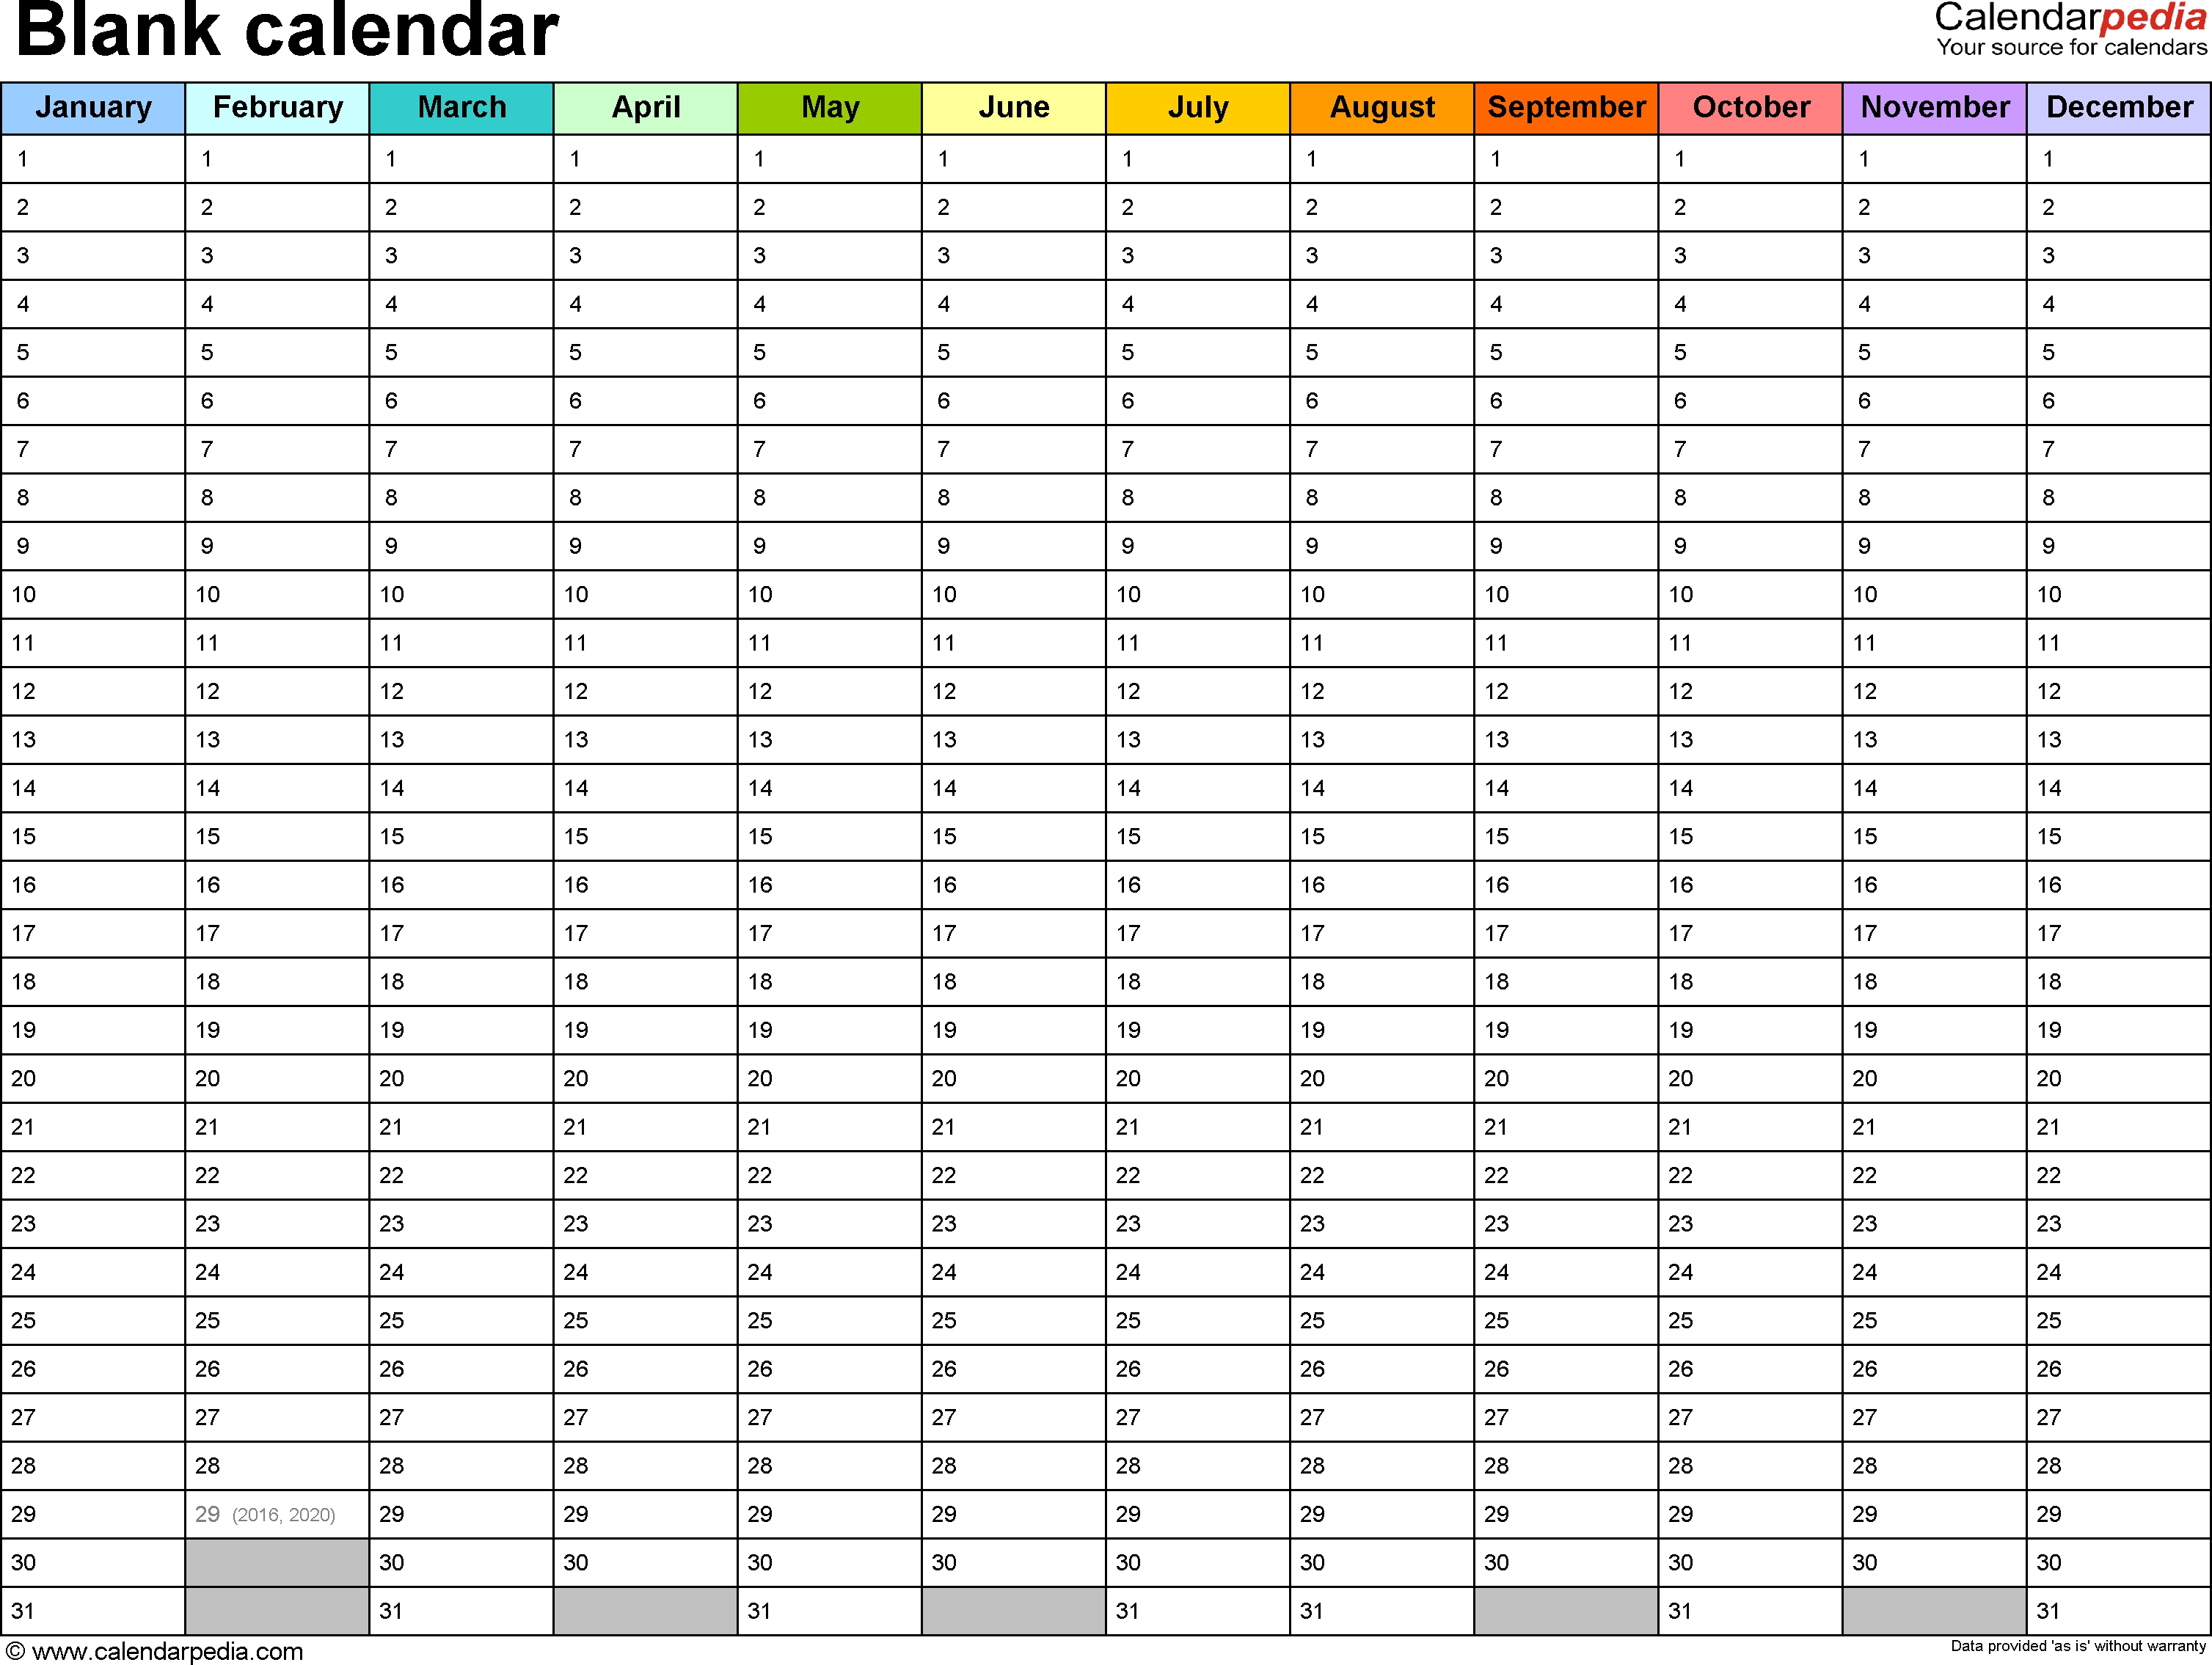 Blank Calendar - 9 Free Printable Microsoft Word Templates 4 Calendar Months On One Page